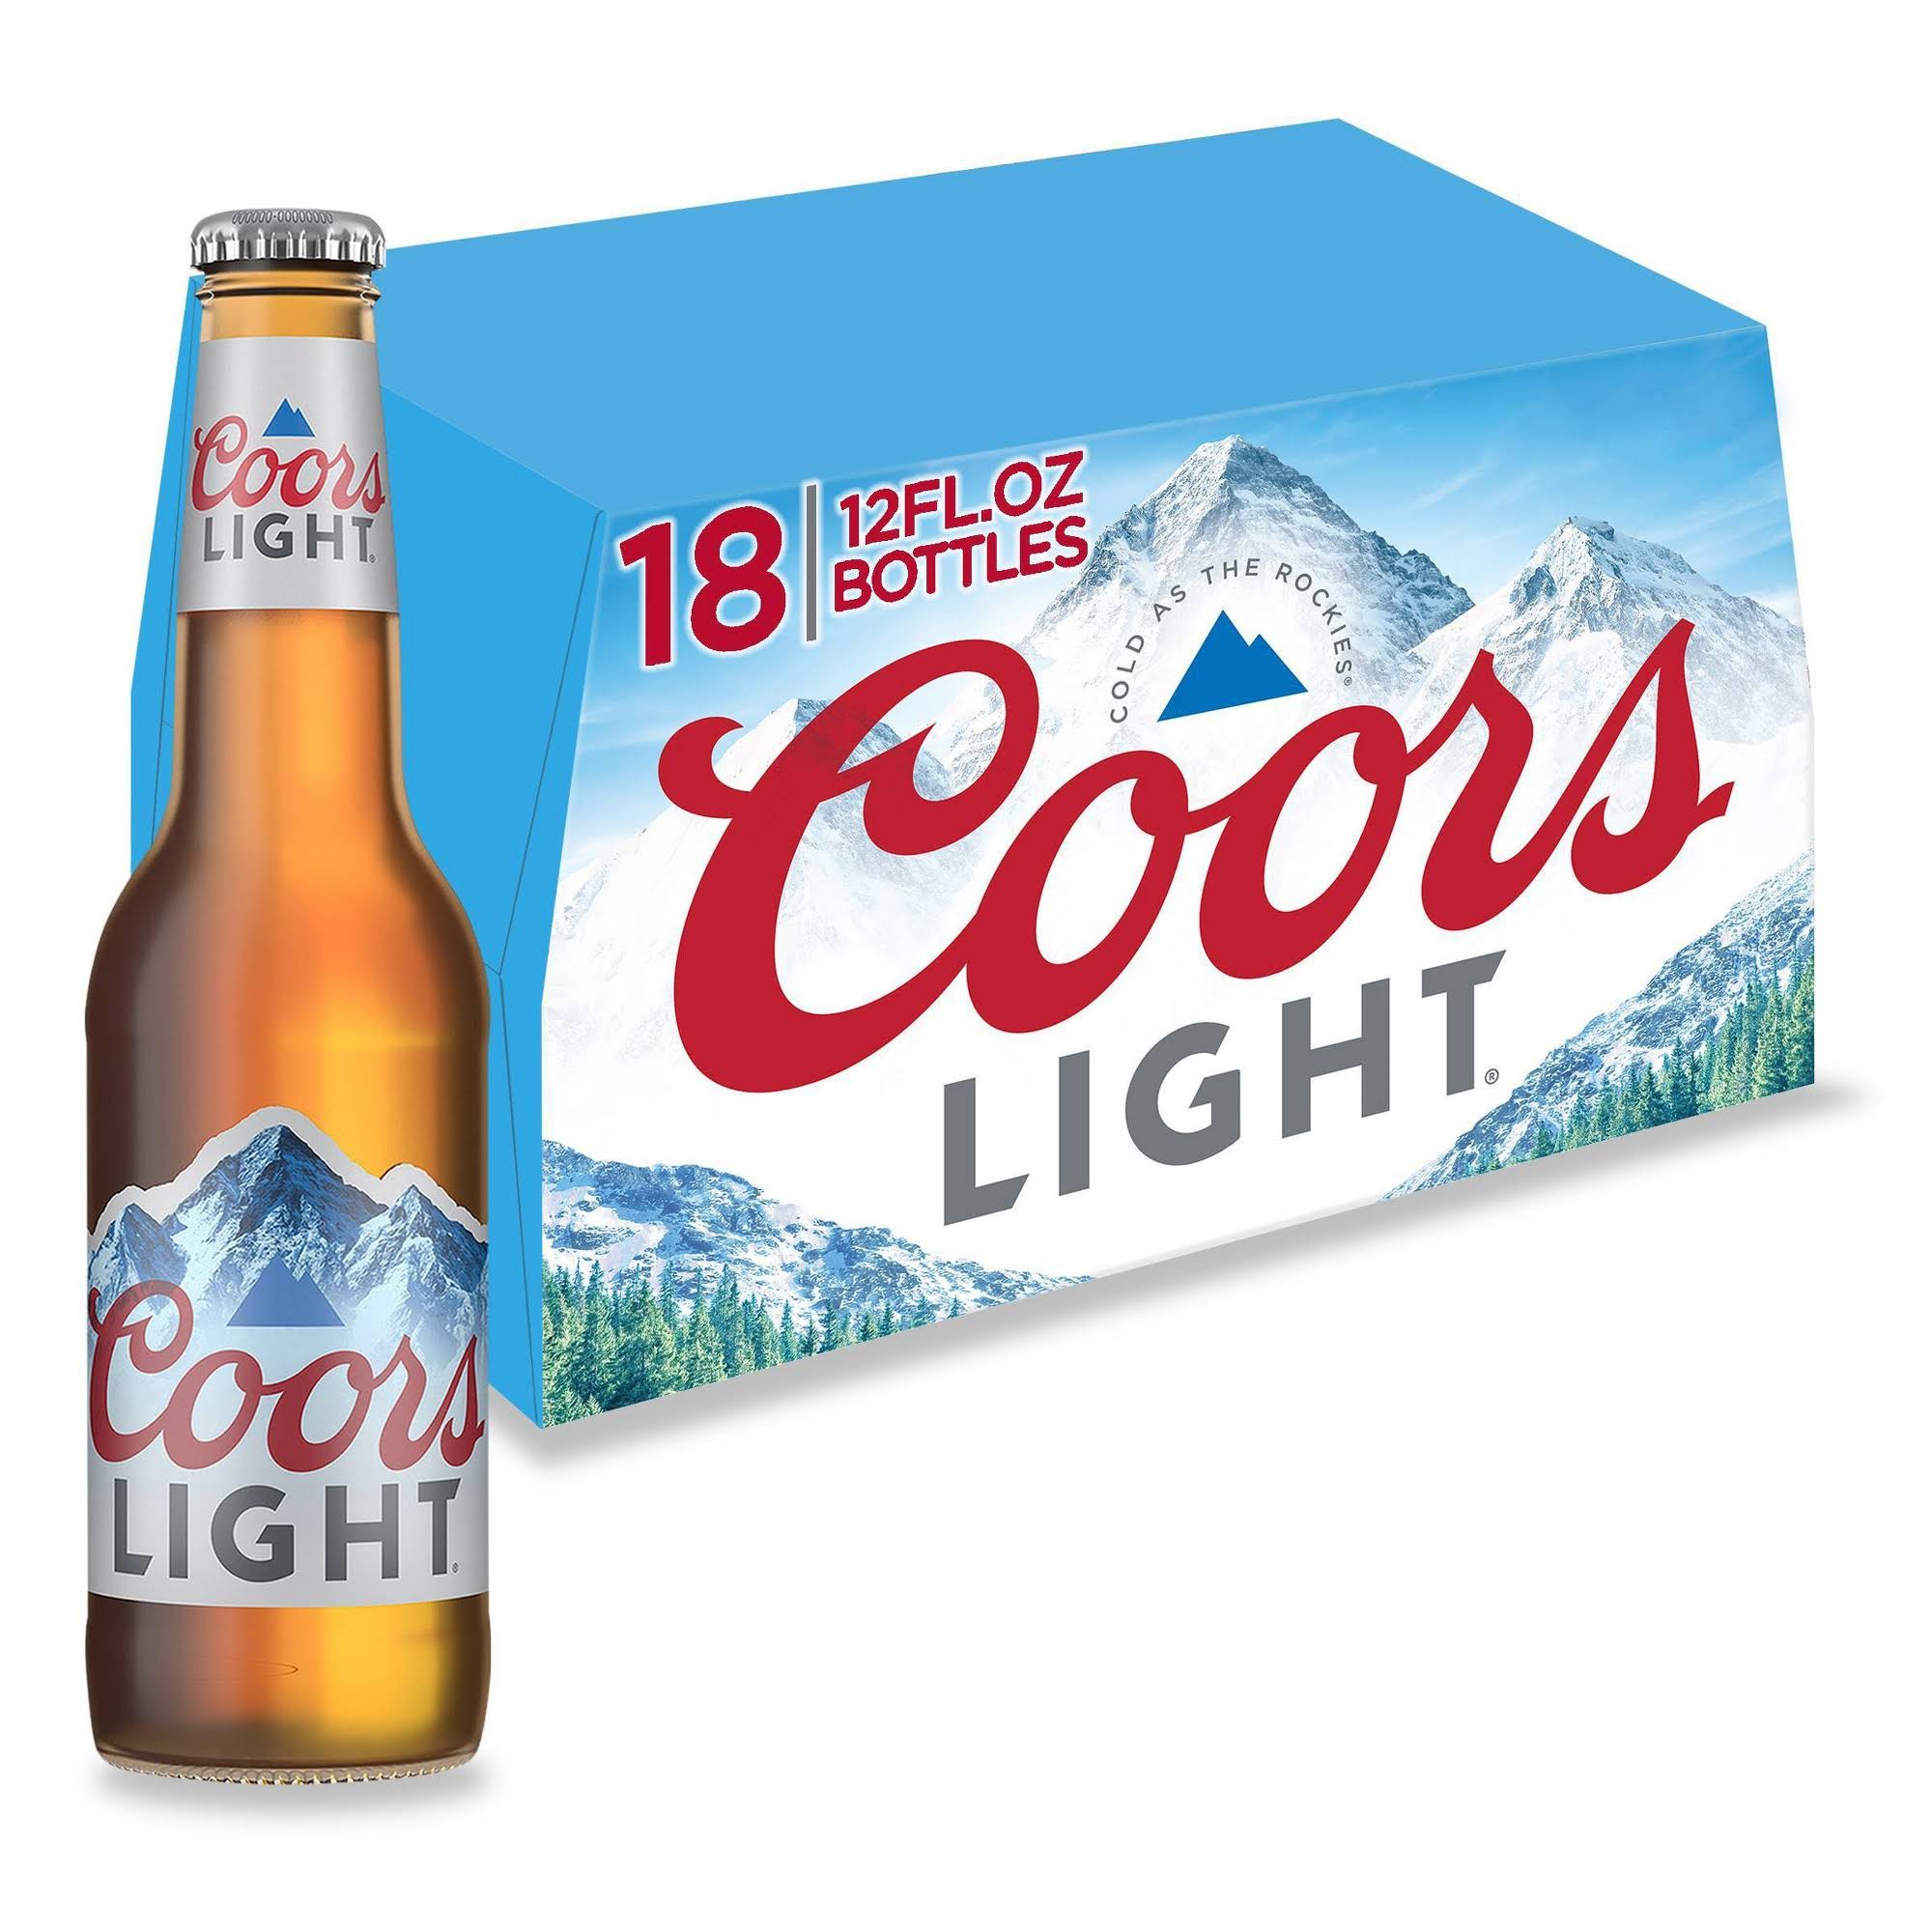 Coors Light Beer Bottles - 12oz, 18pk